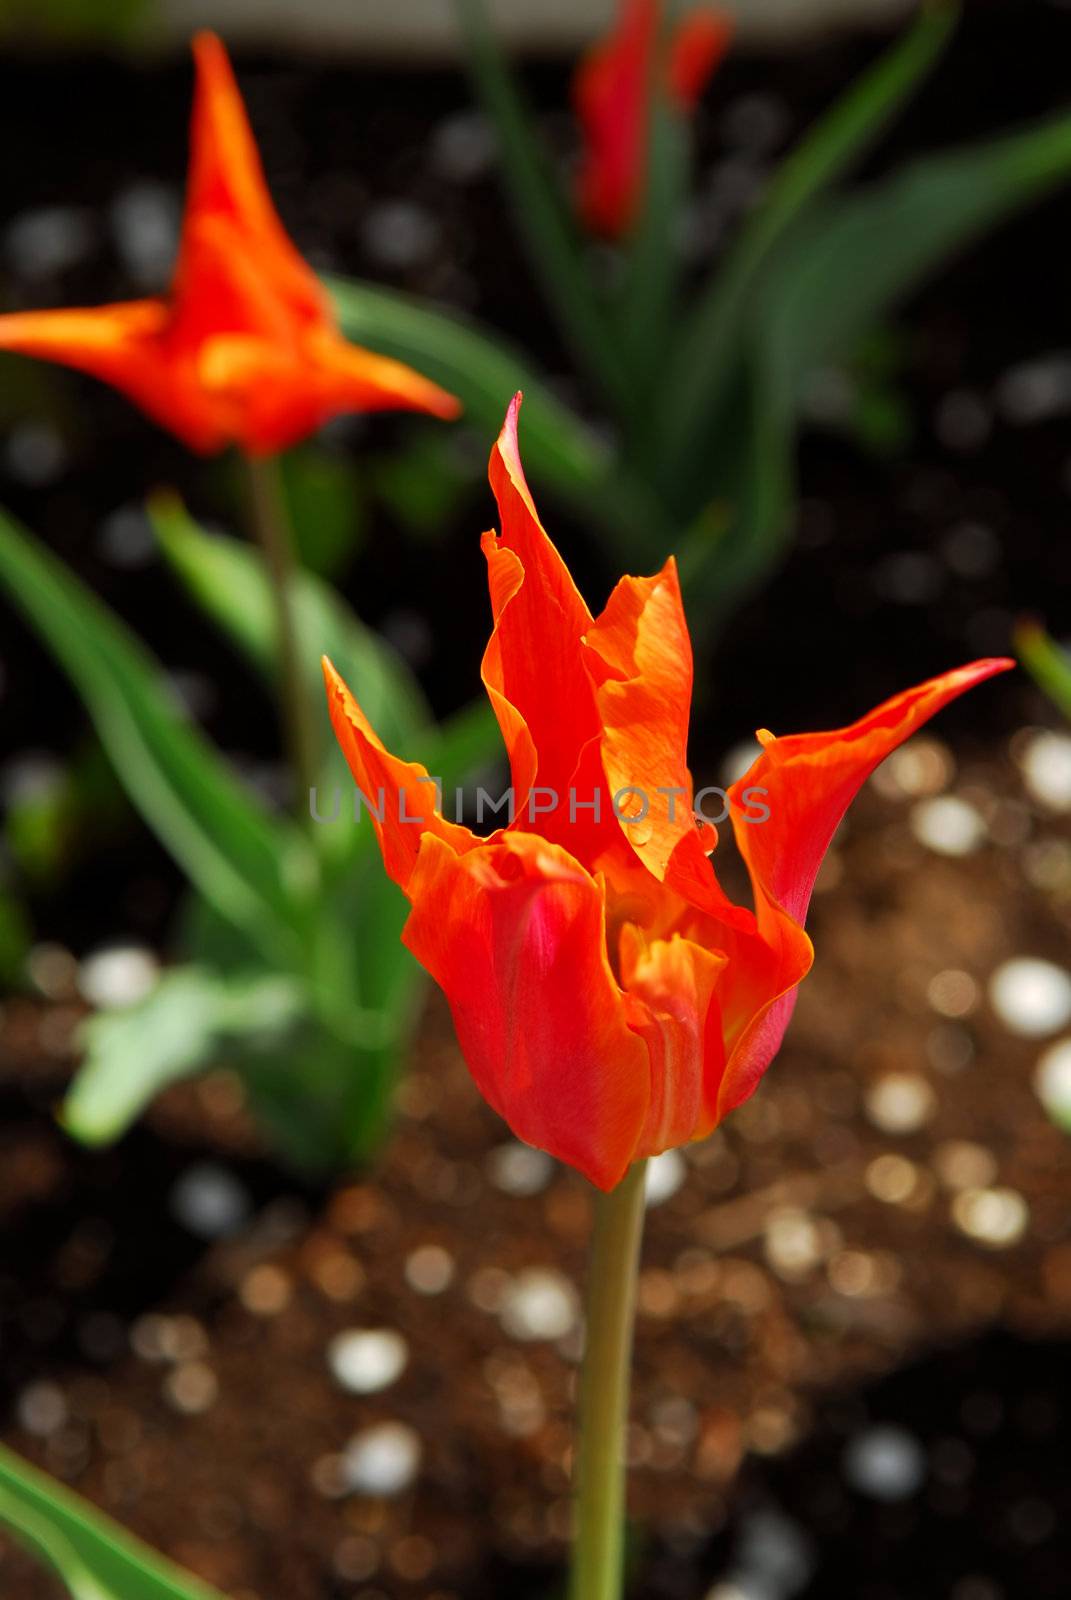 Tulips in a garden by elenathewise